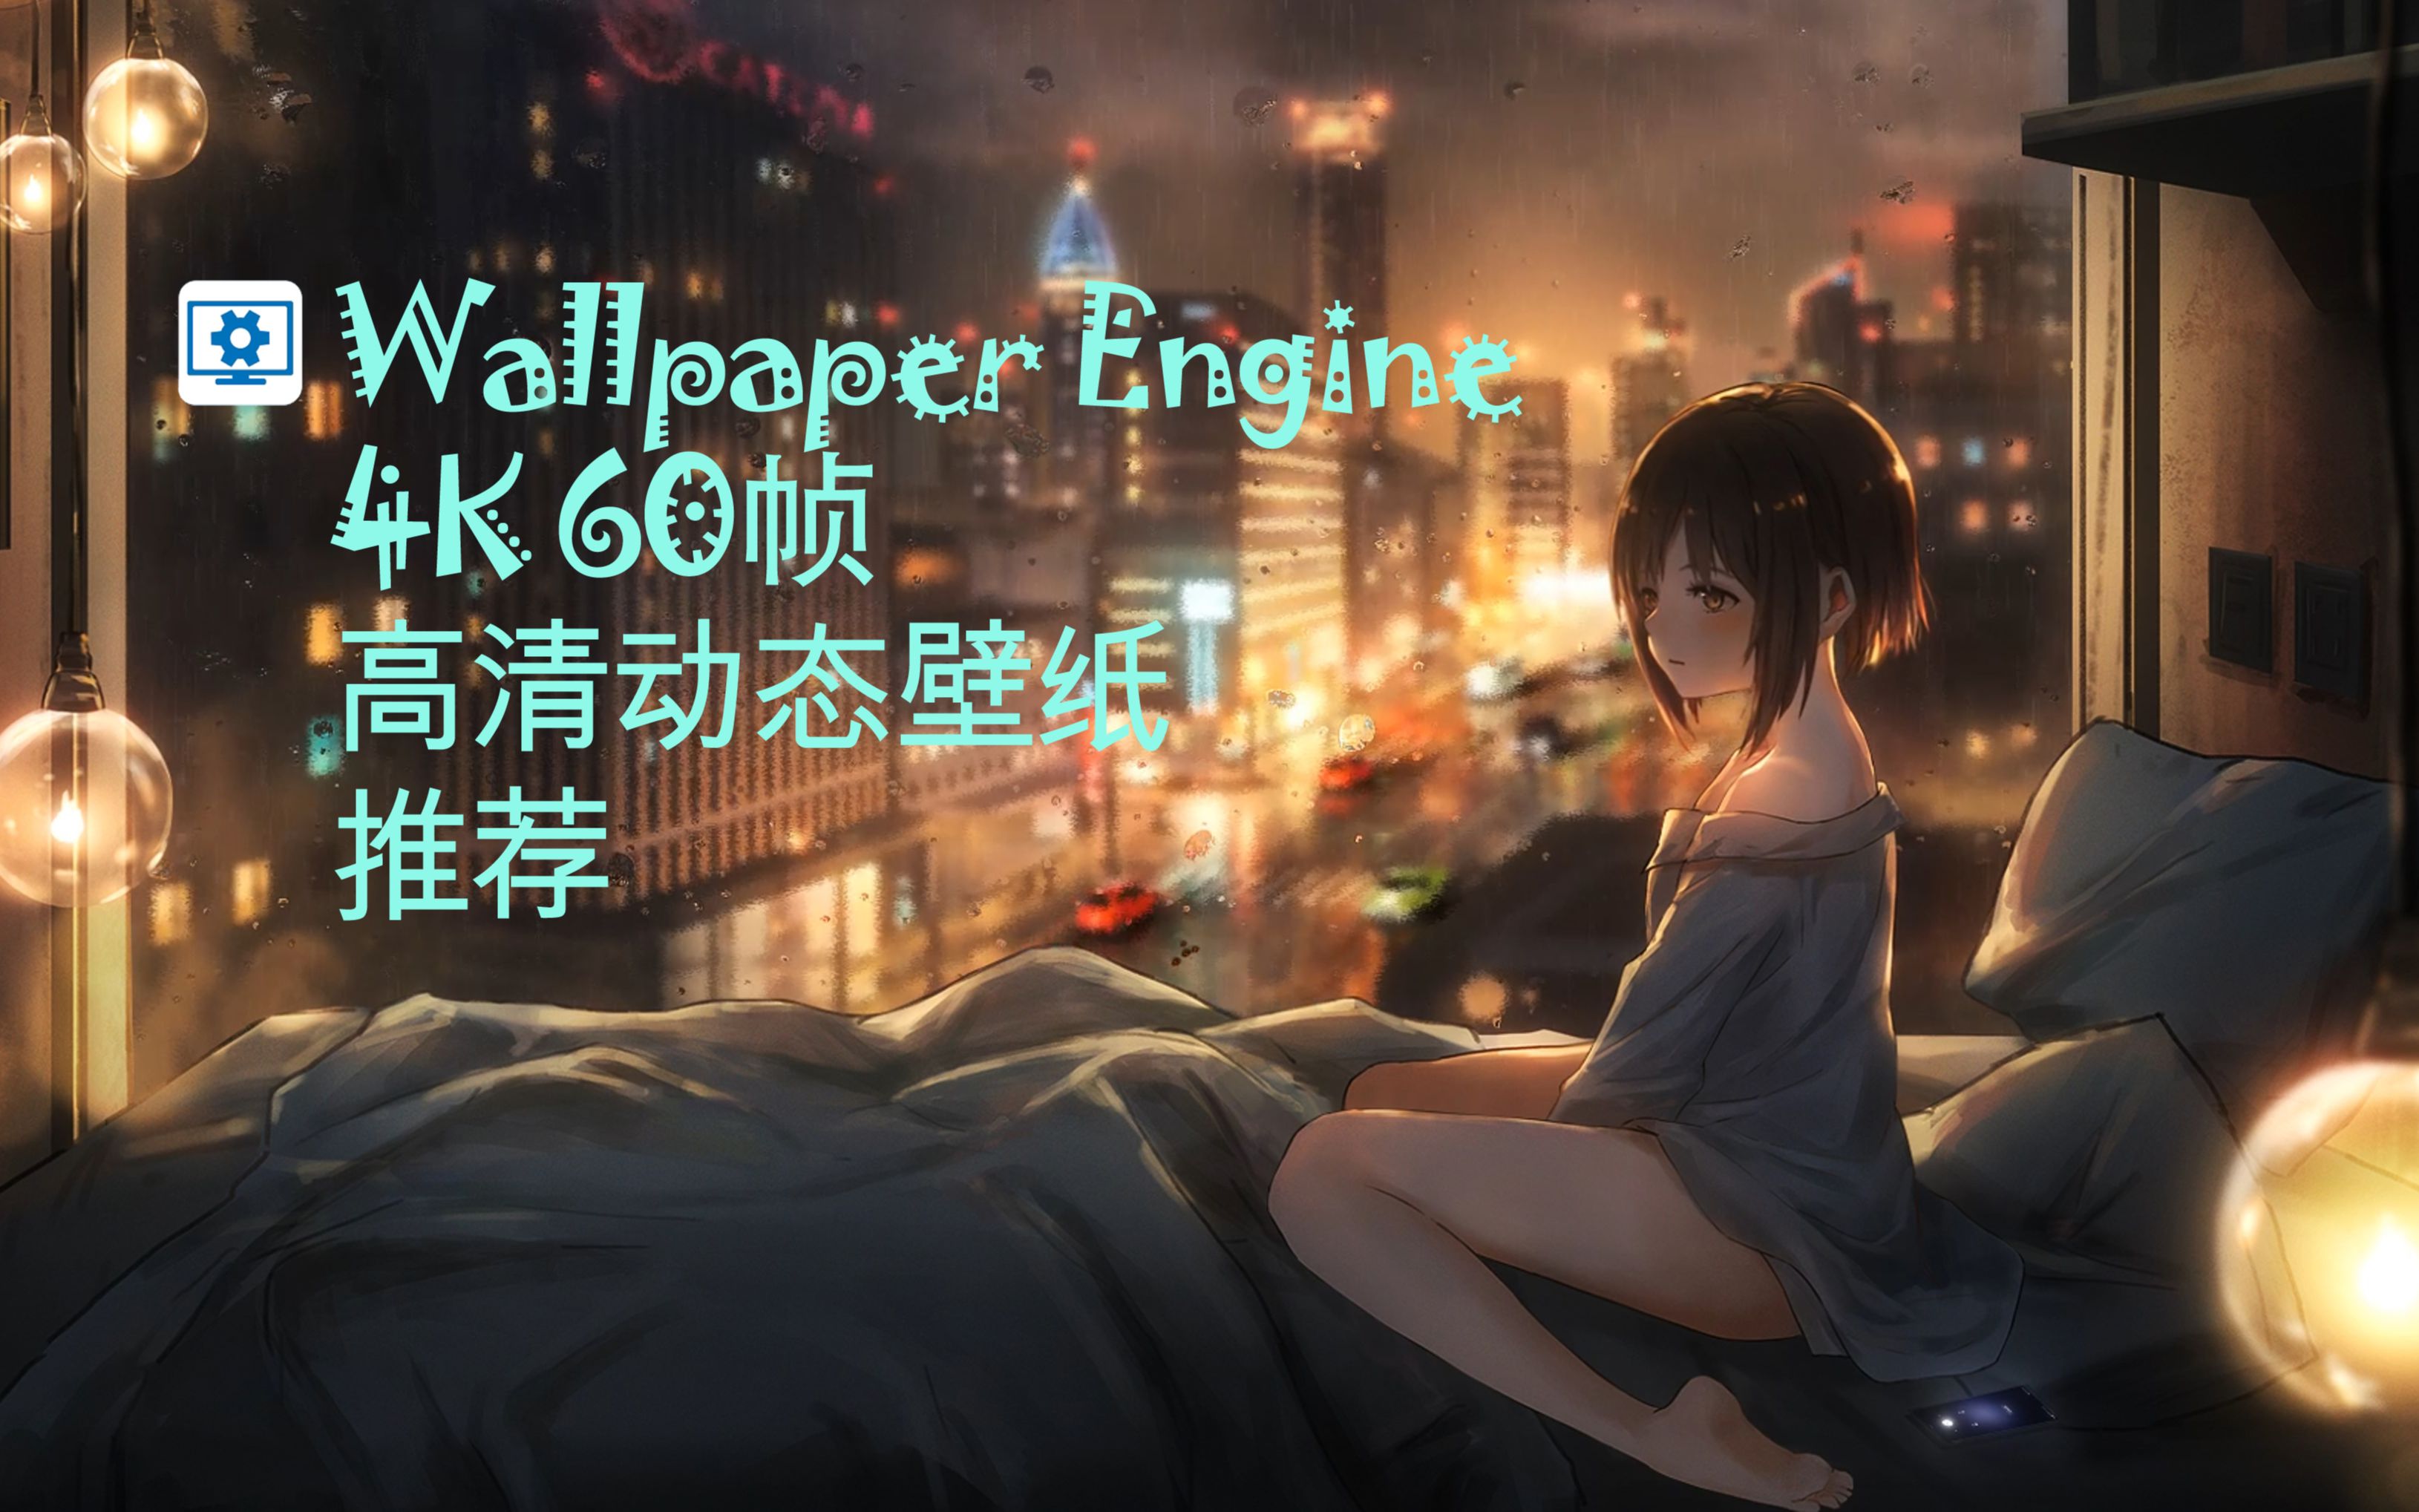 O no mori 織の檻 1080p 60fps wallpaper engine anime – Artofit